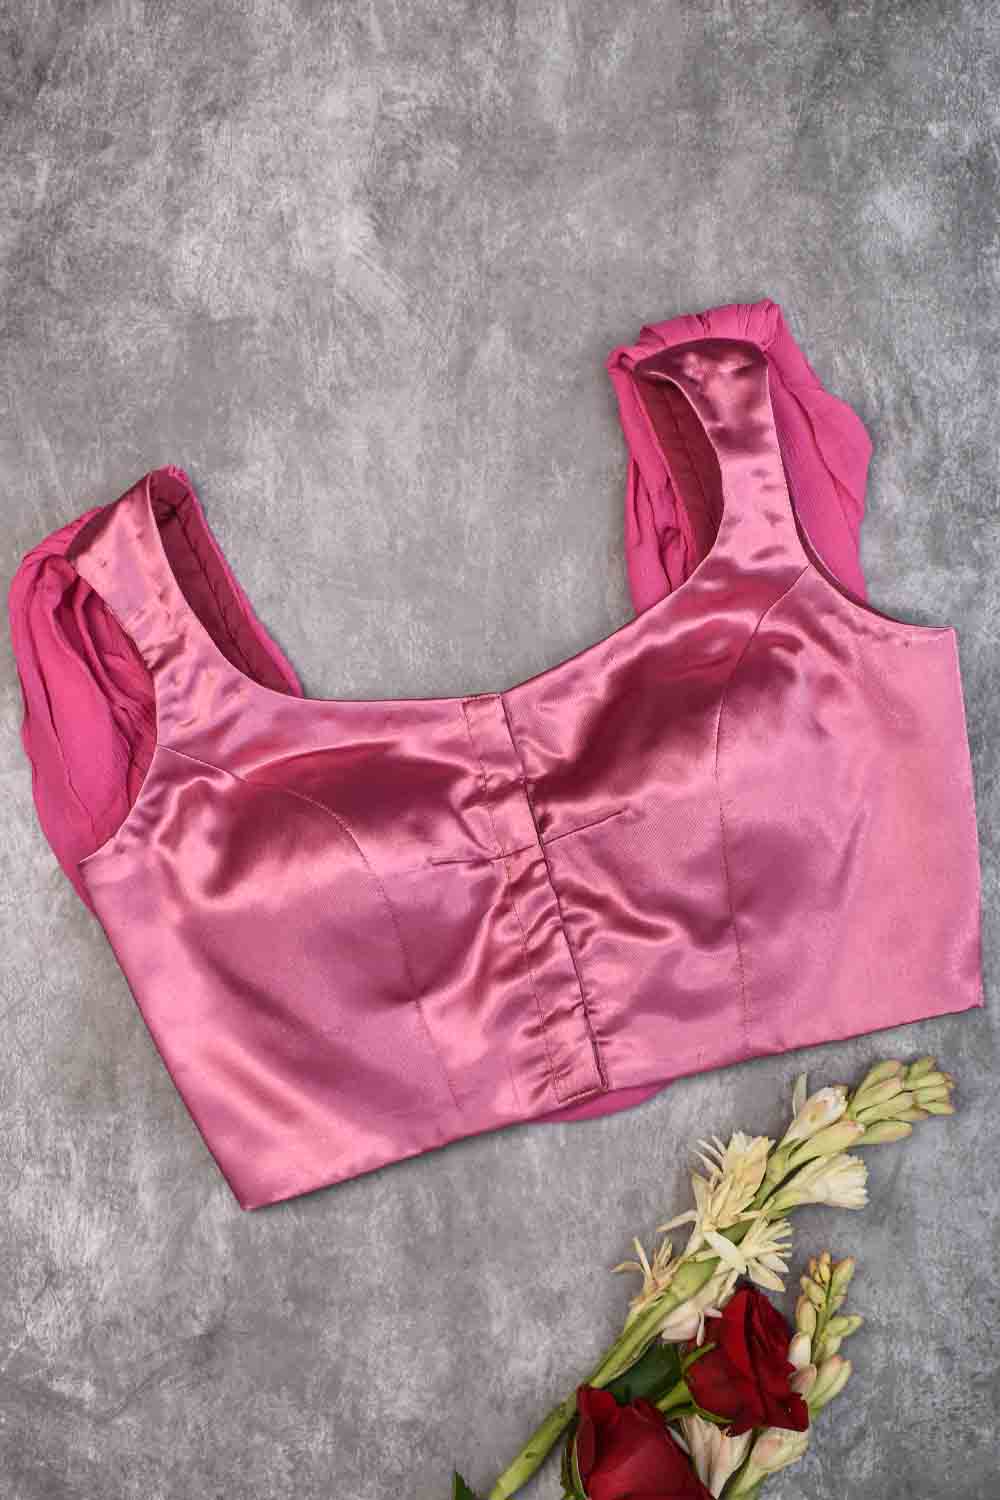 Bubblegum pink satin & chiffon Cowl neck blouse